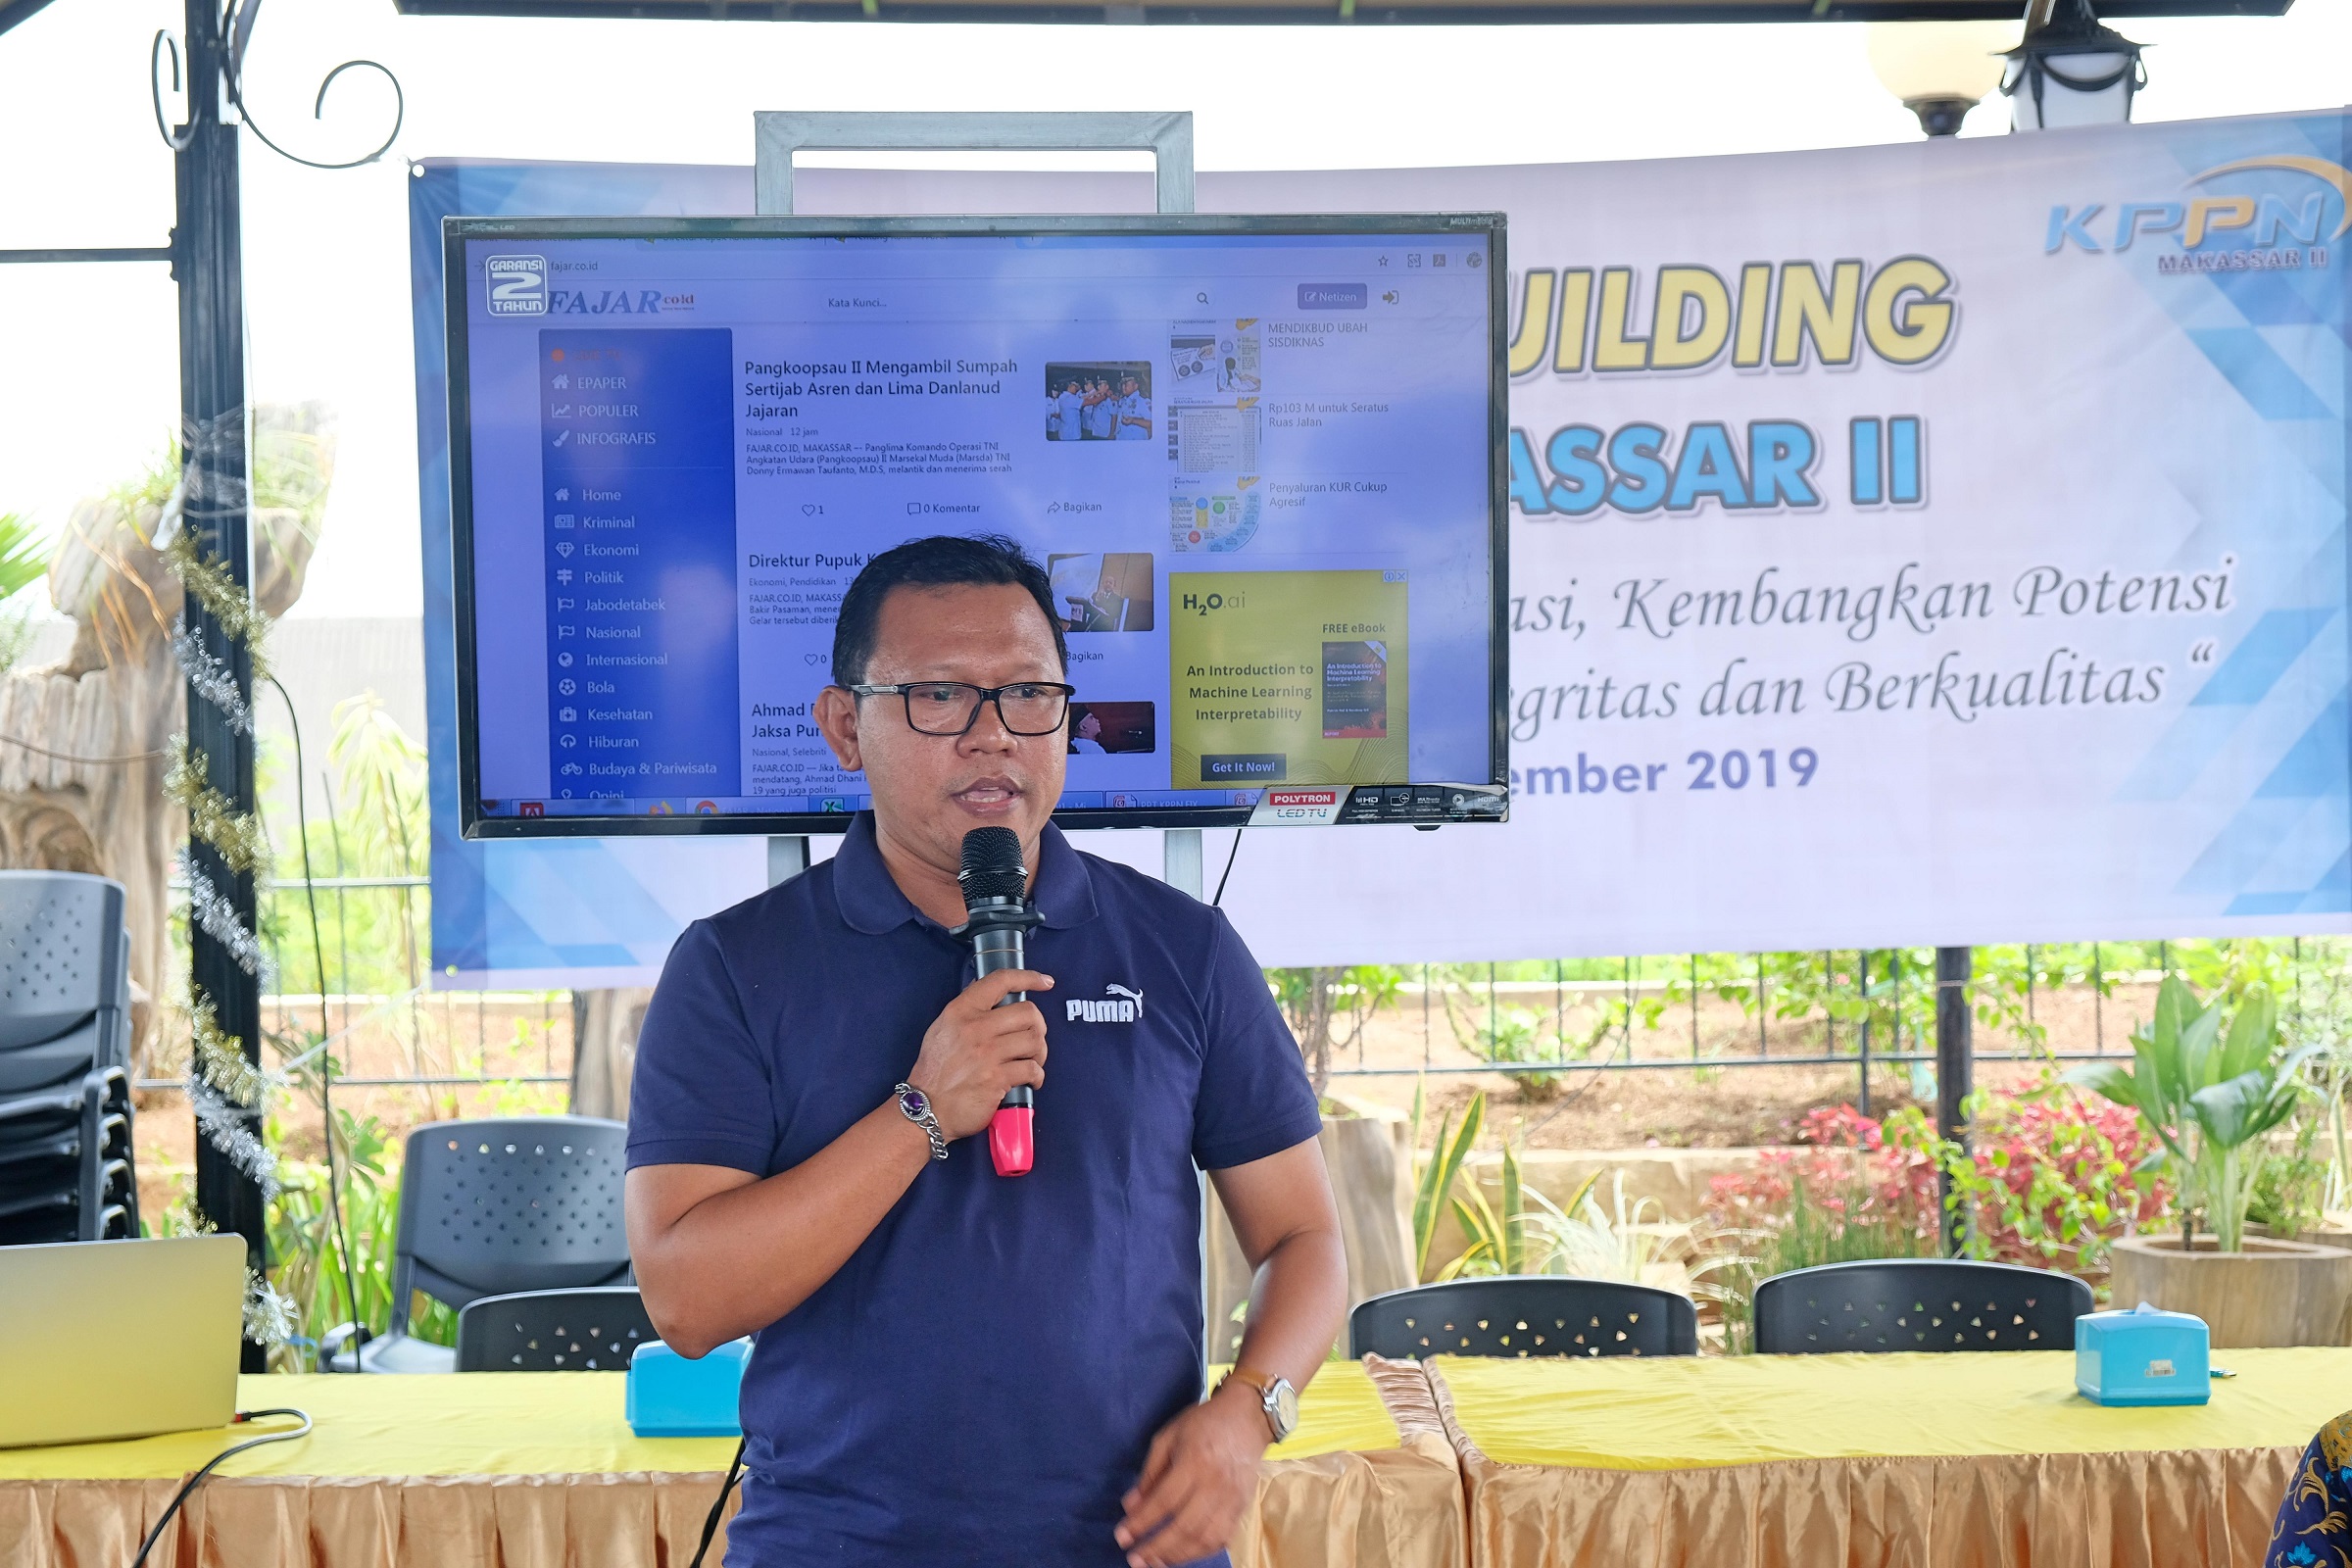 Capacity Building Literasi KPPN Makassar II